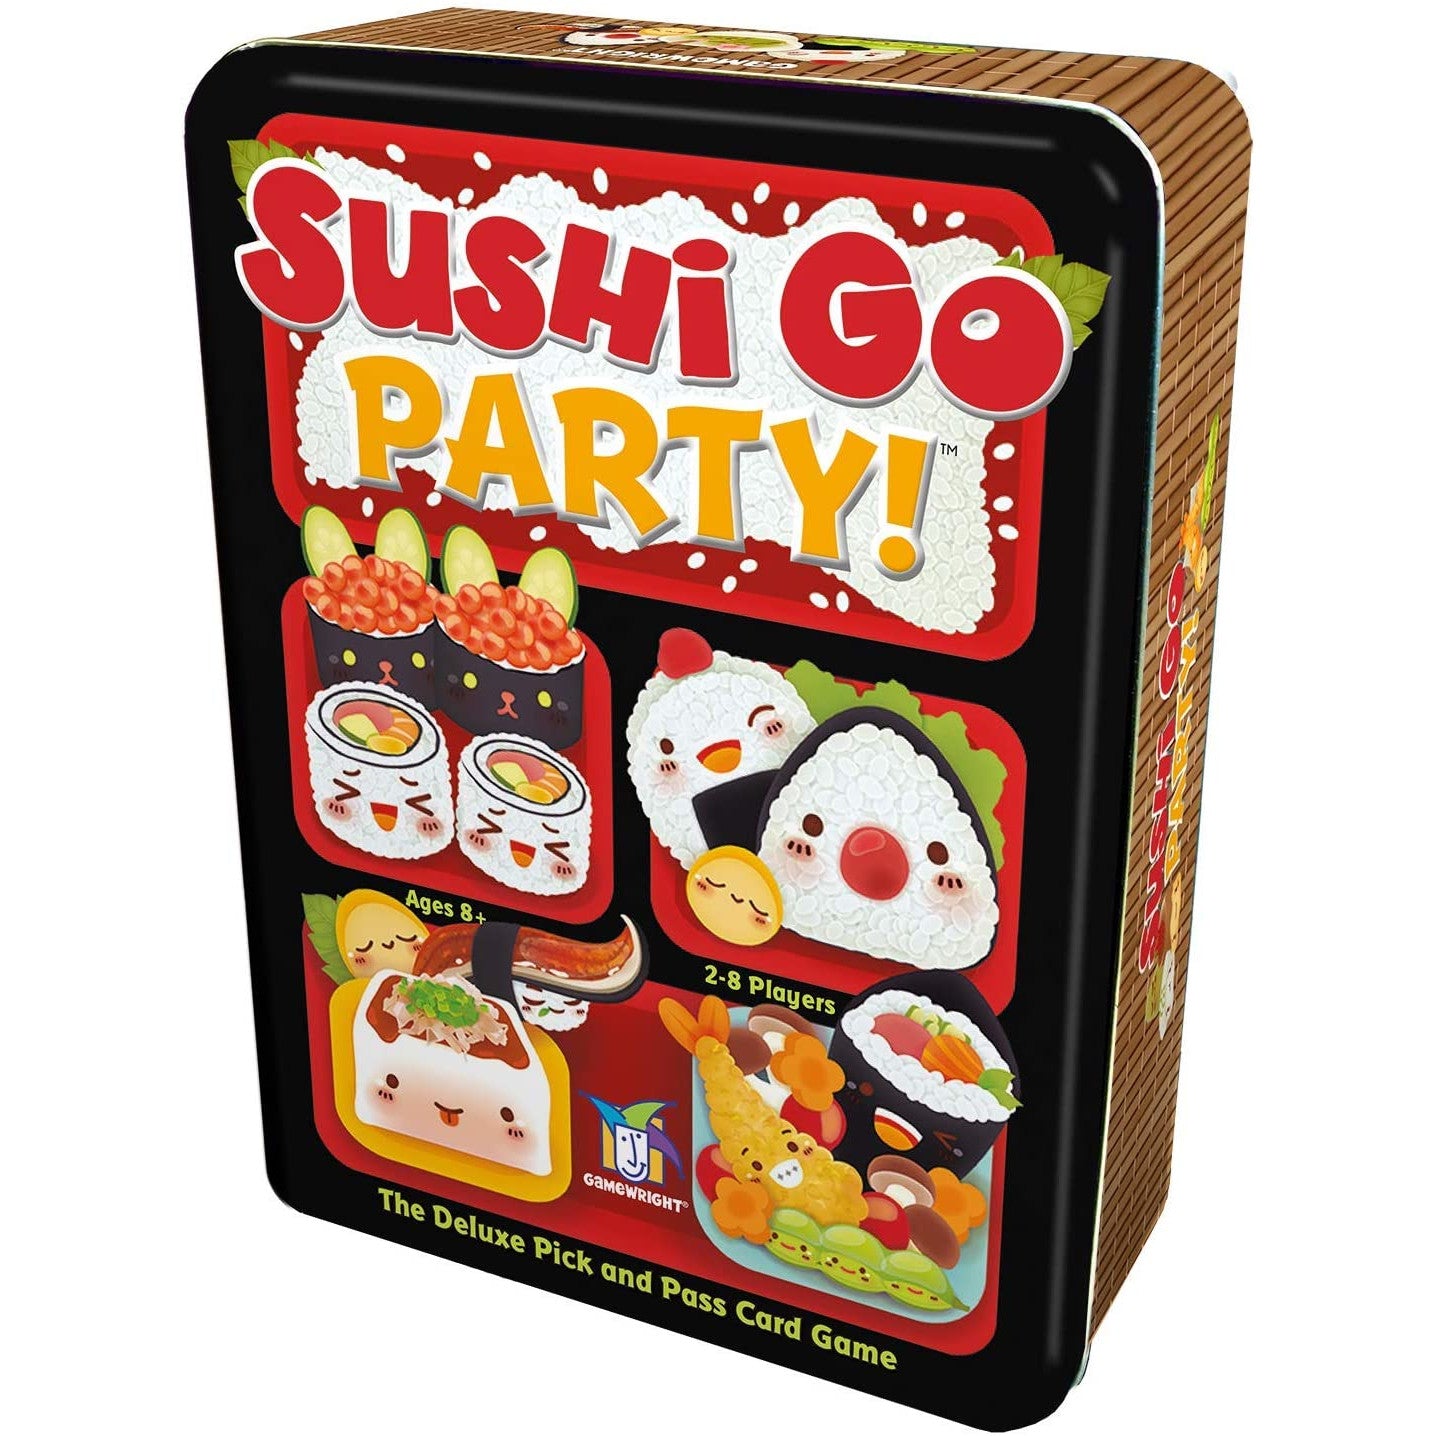 Gamewright Sushi Go Party! 2